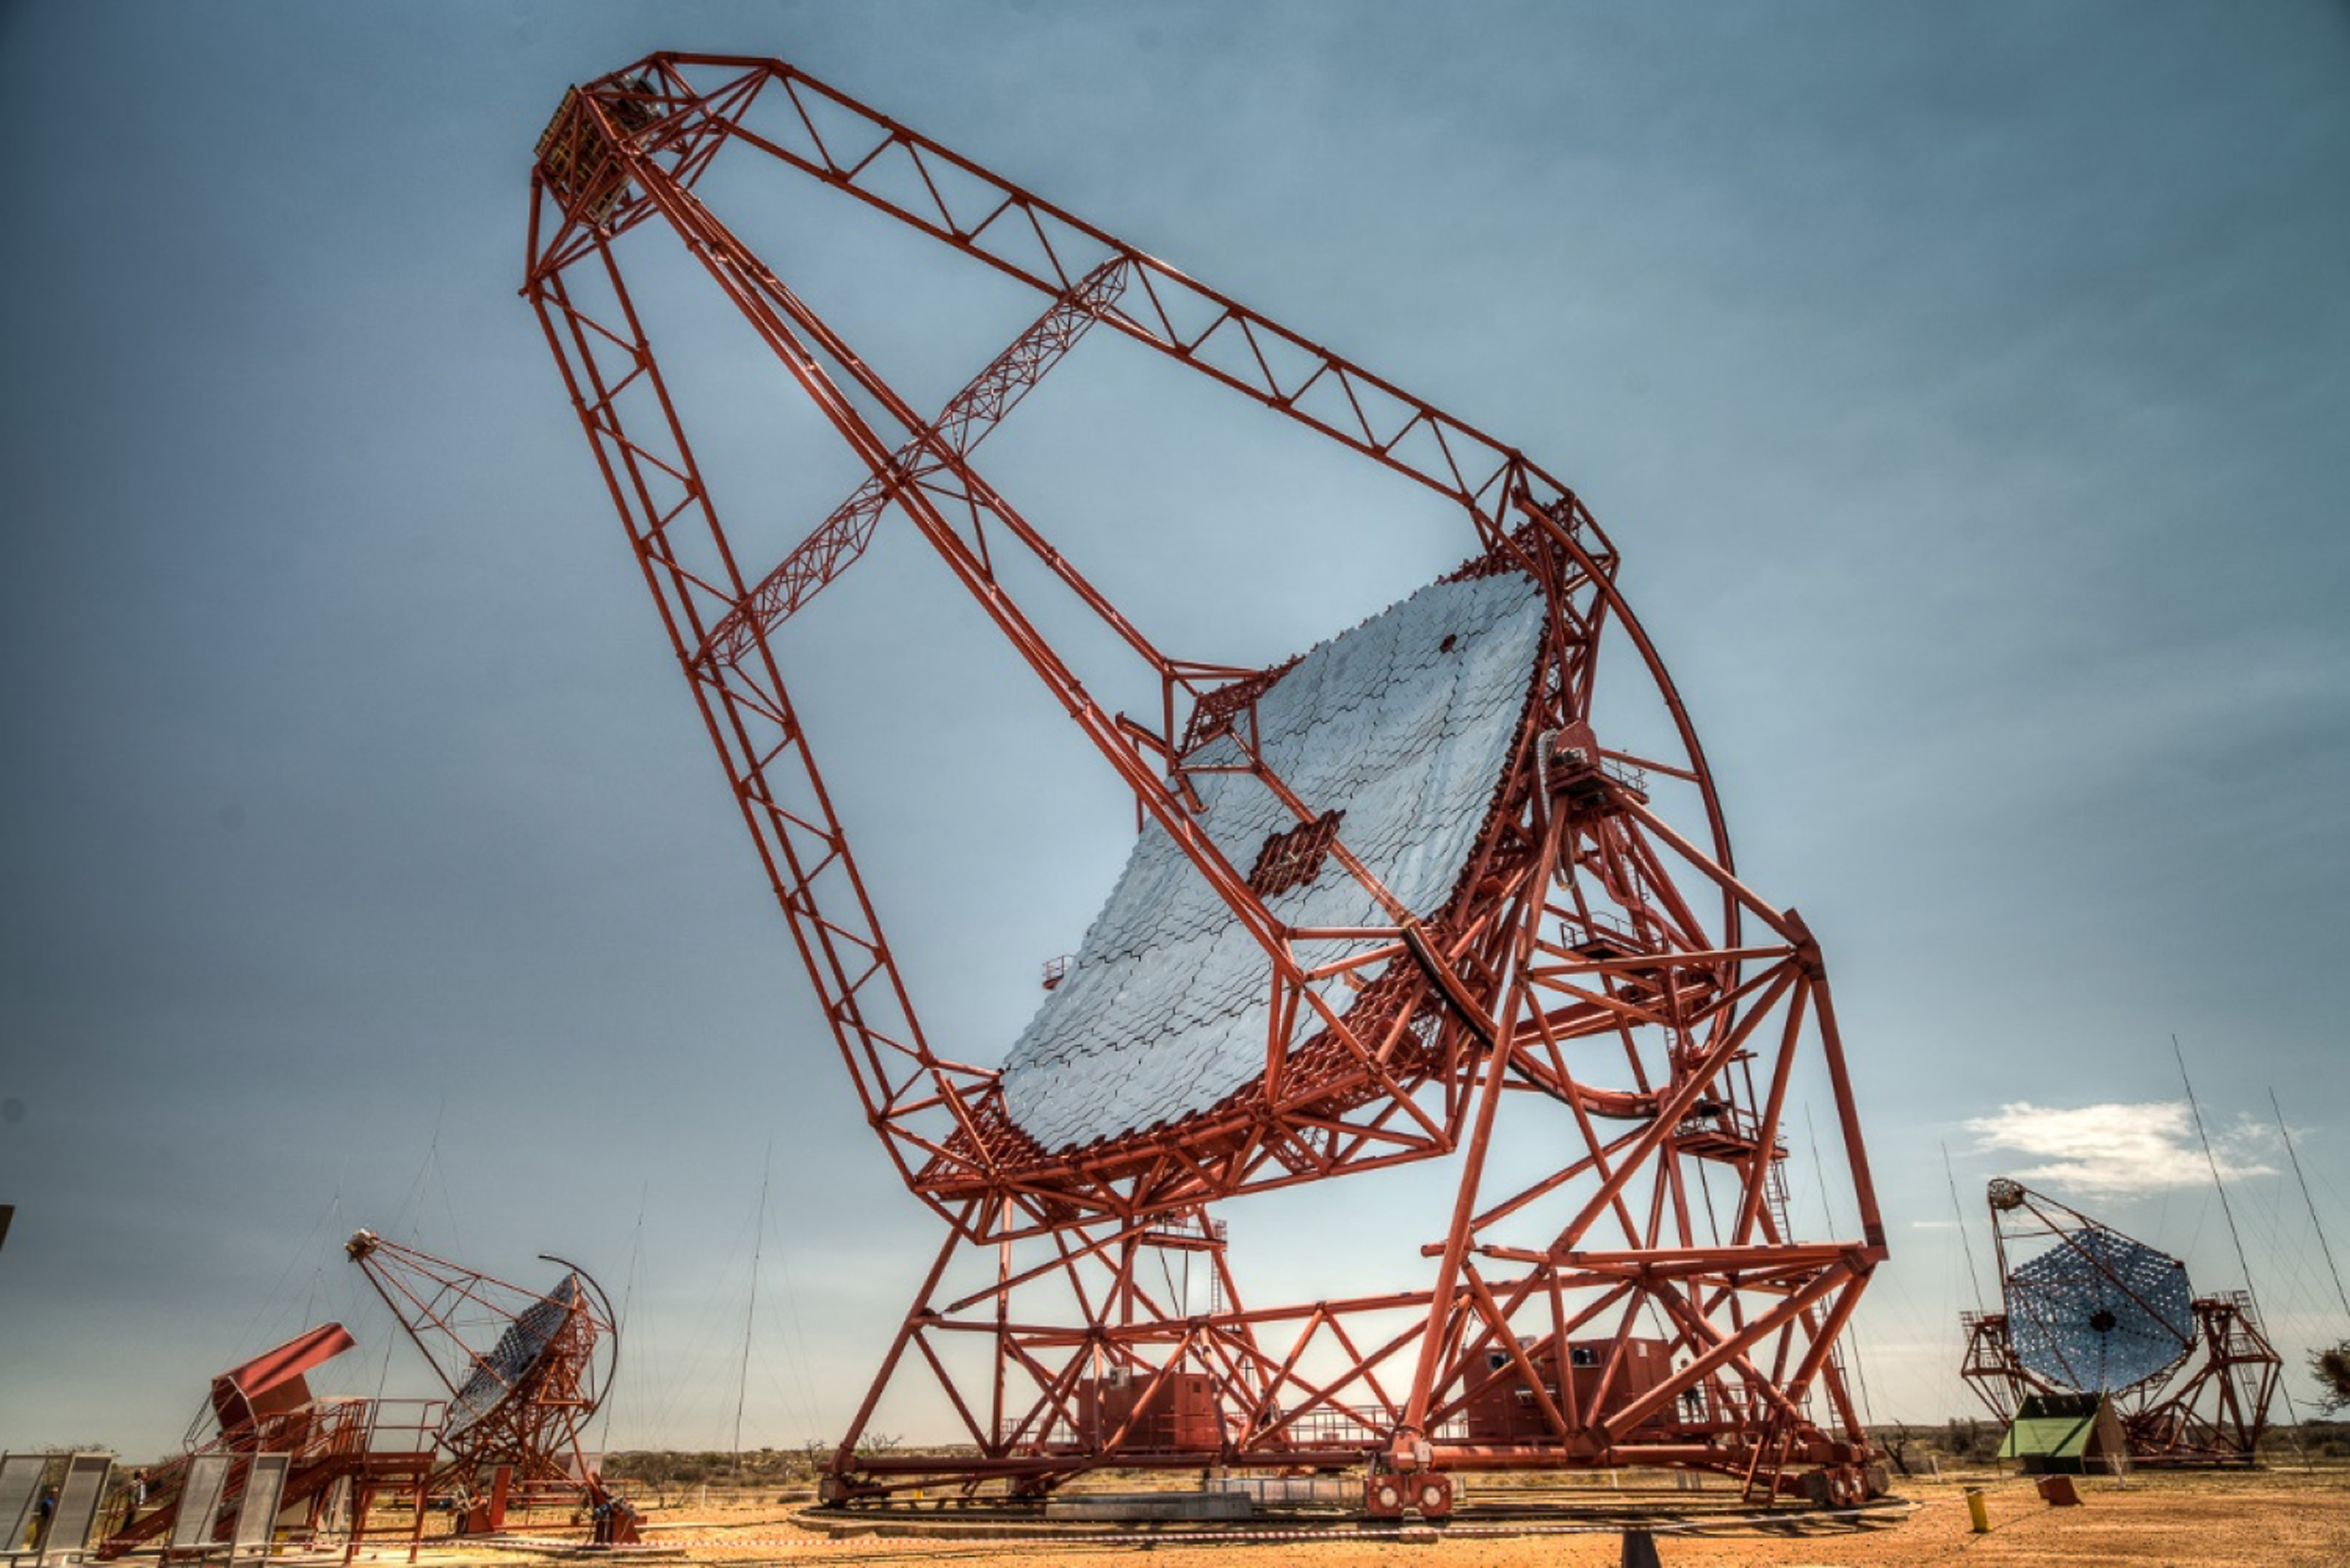 The HESS telescope in Namibia